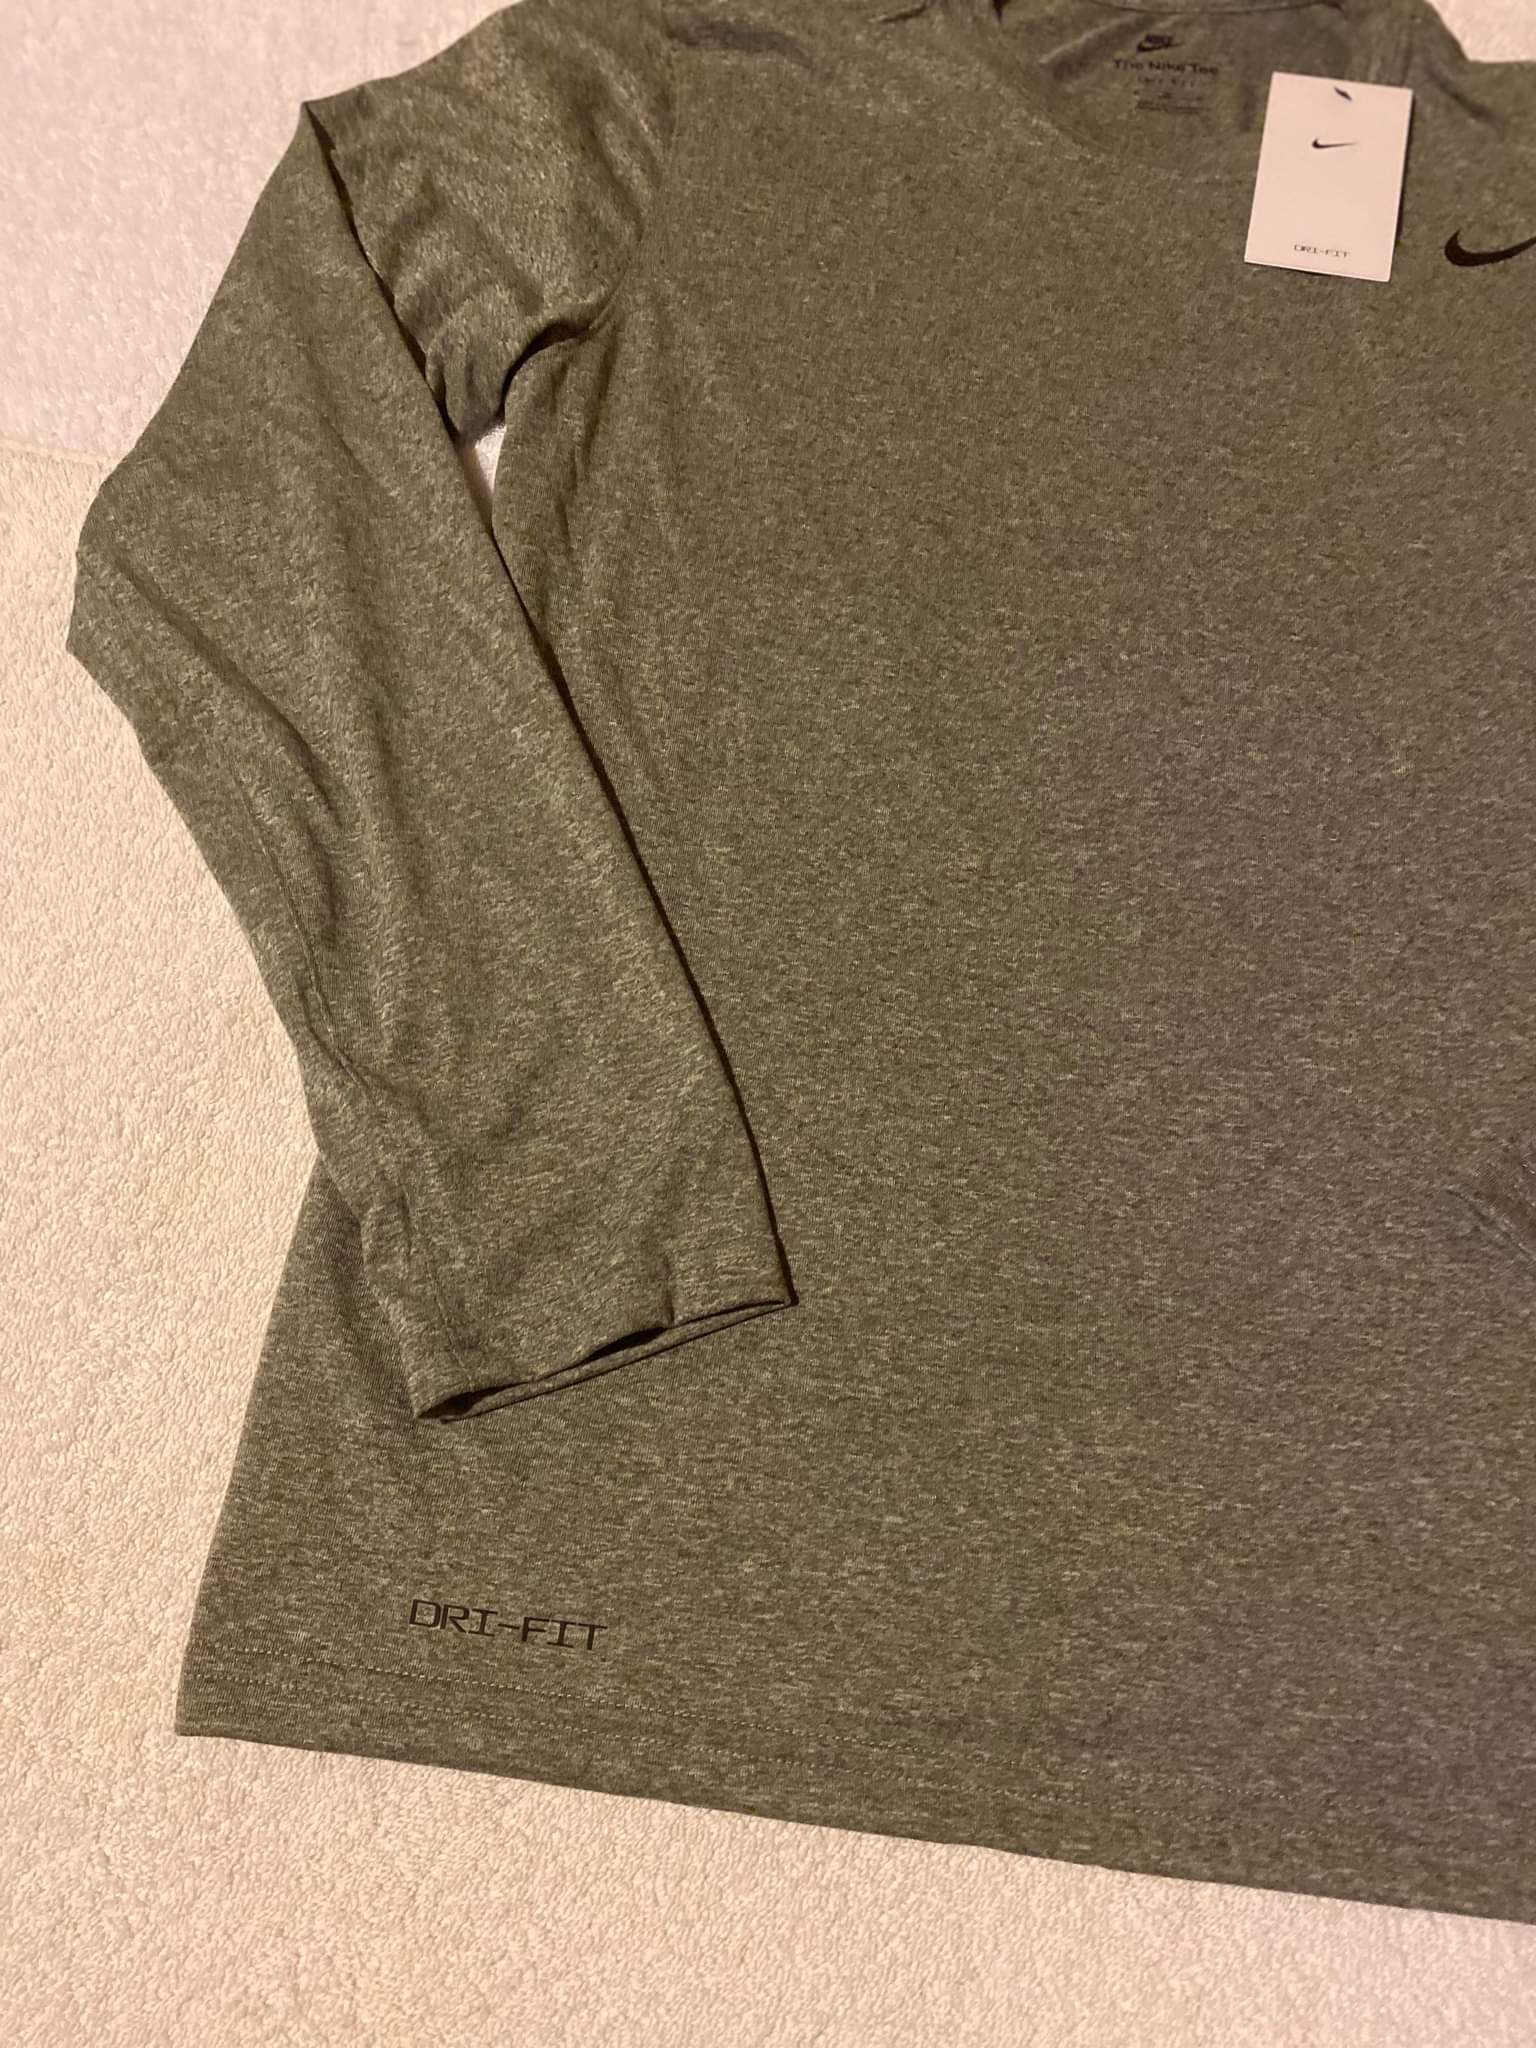 Harvard Nike Dri-Fit Legend Long Sleeve Tee Shirt